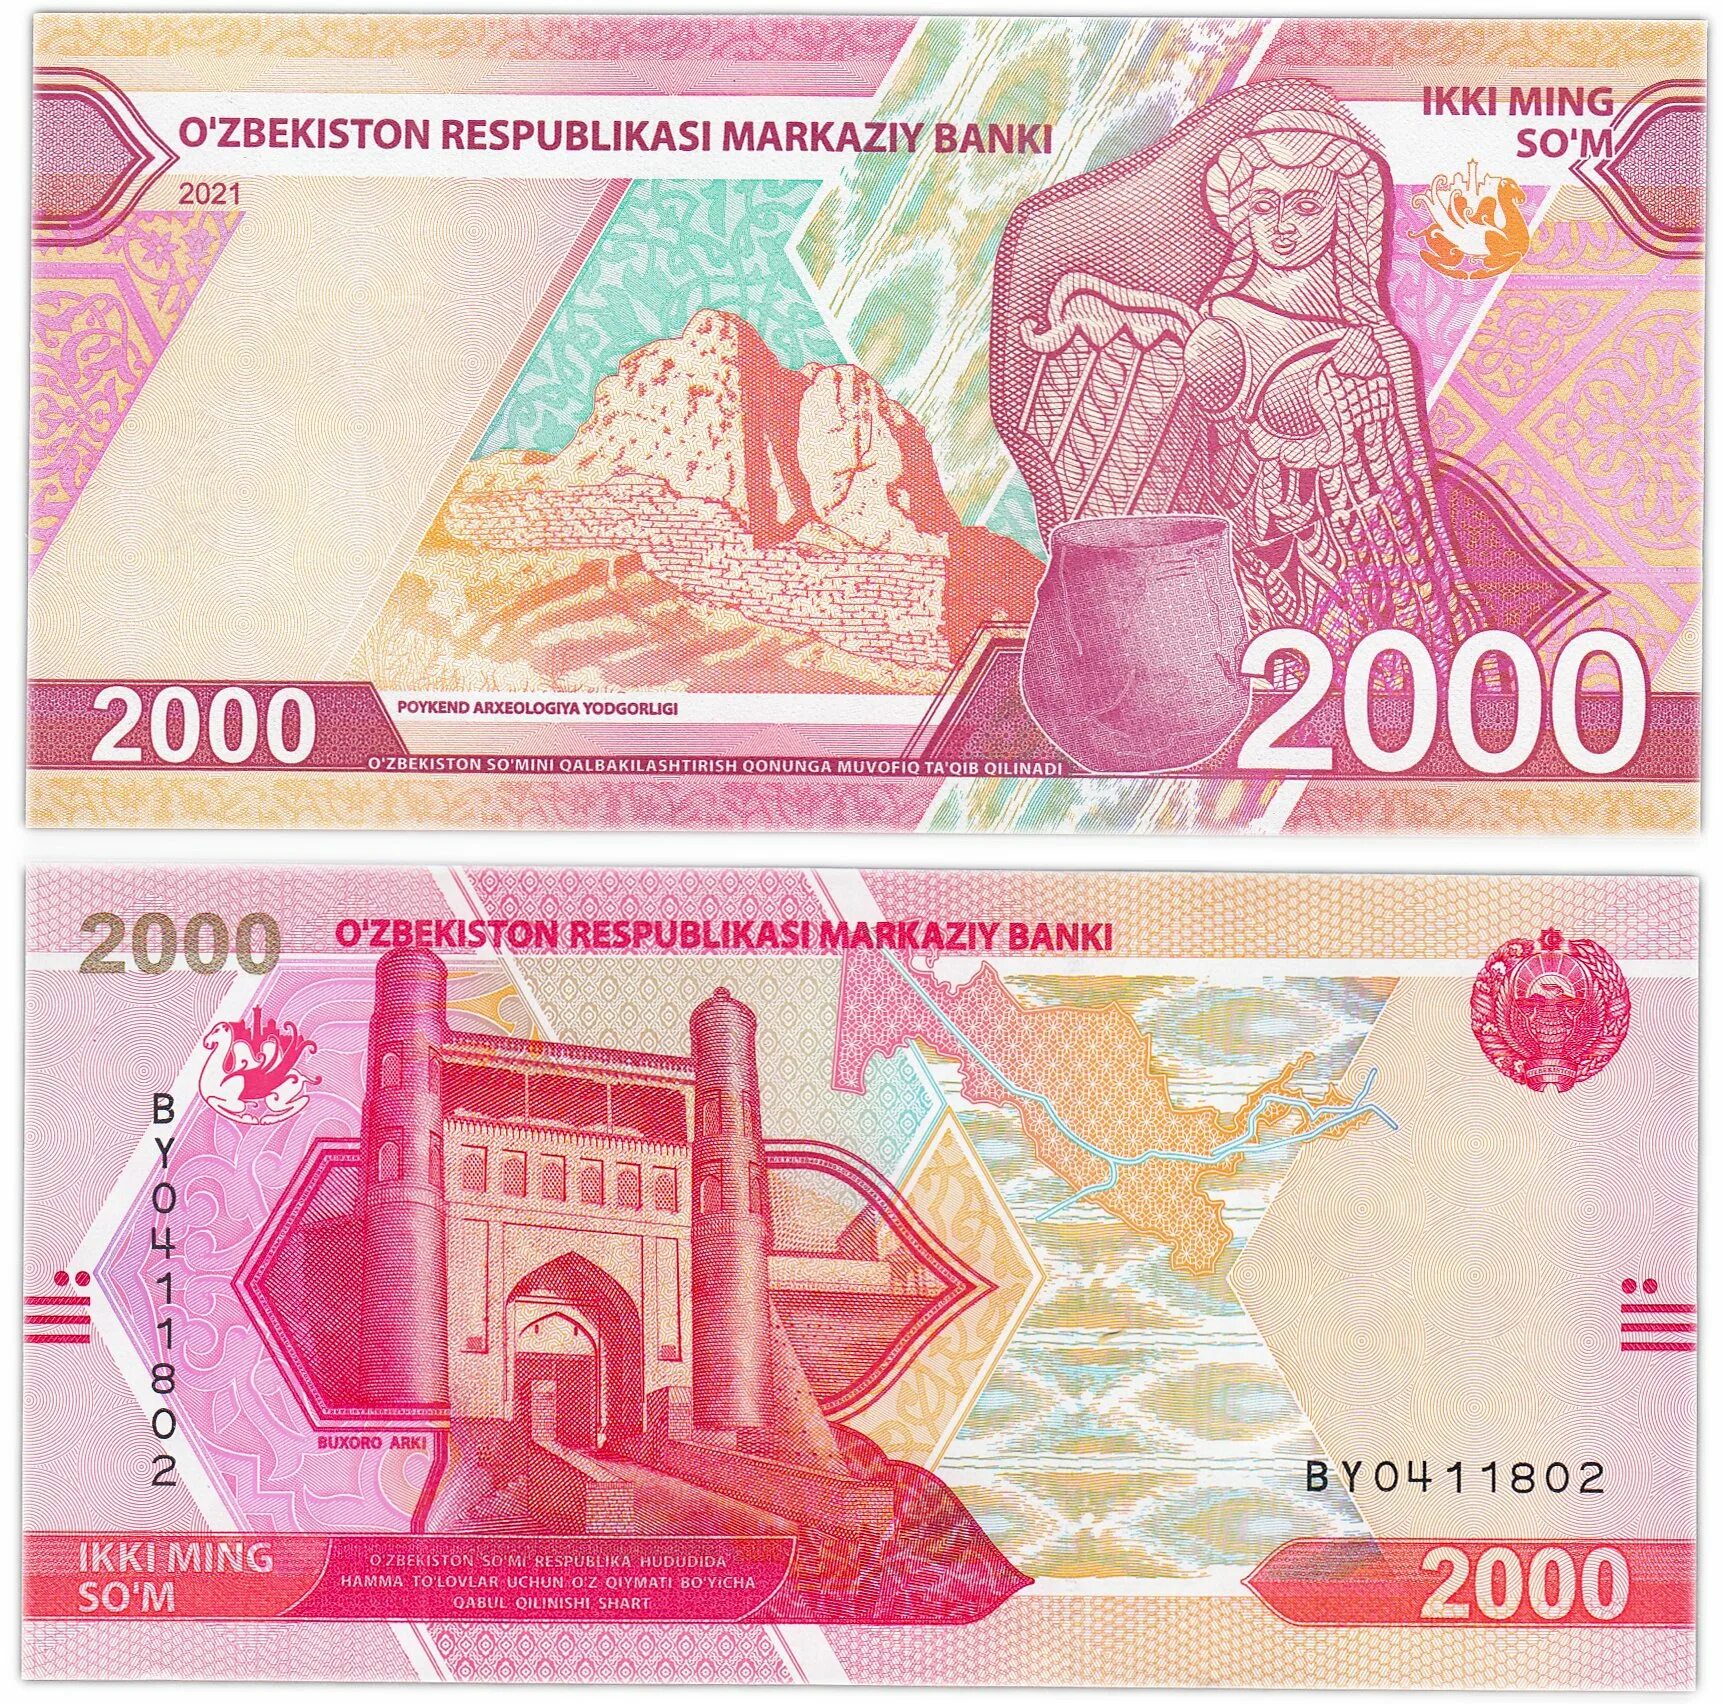 Узбекские деньги курс. Банкноты Узбекистана 2021. 2000 Купюра Узбекистана. Банкнота 2000 сум Узбекистан 2021. Банкнота Узбекистан 20 000 сом 2021.